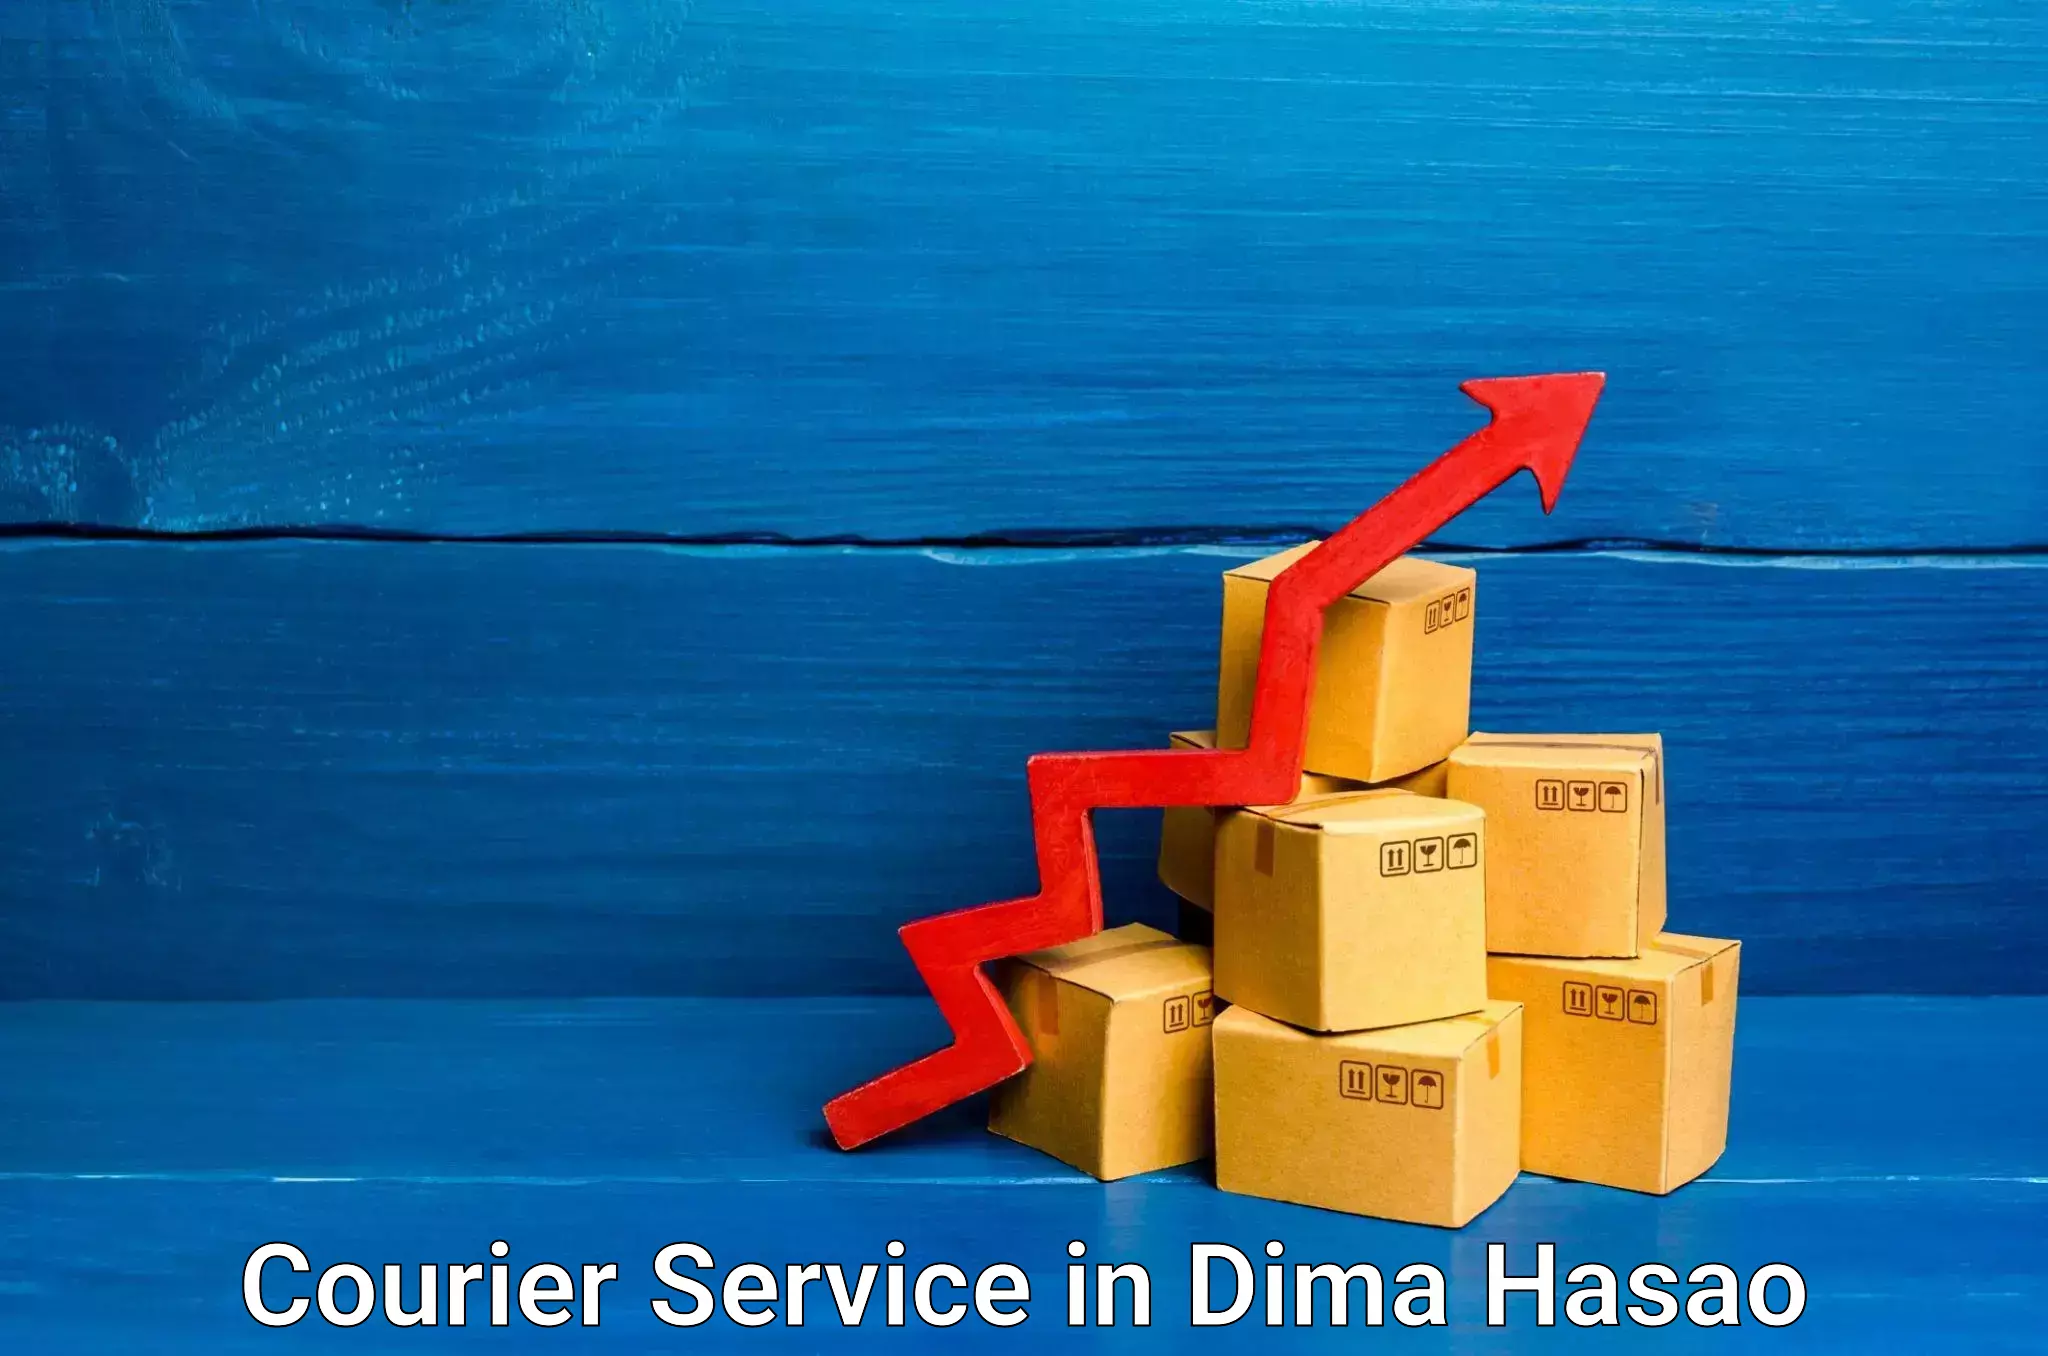 Express package handling in Dima Hasao